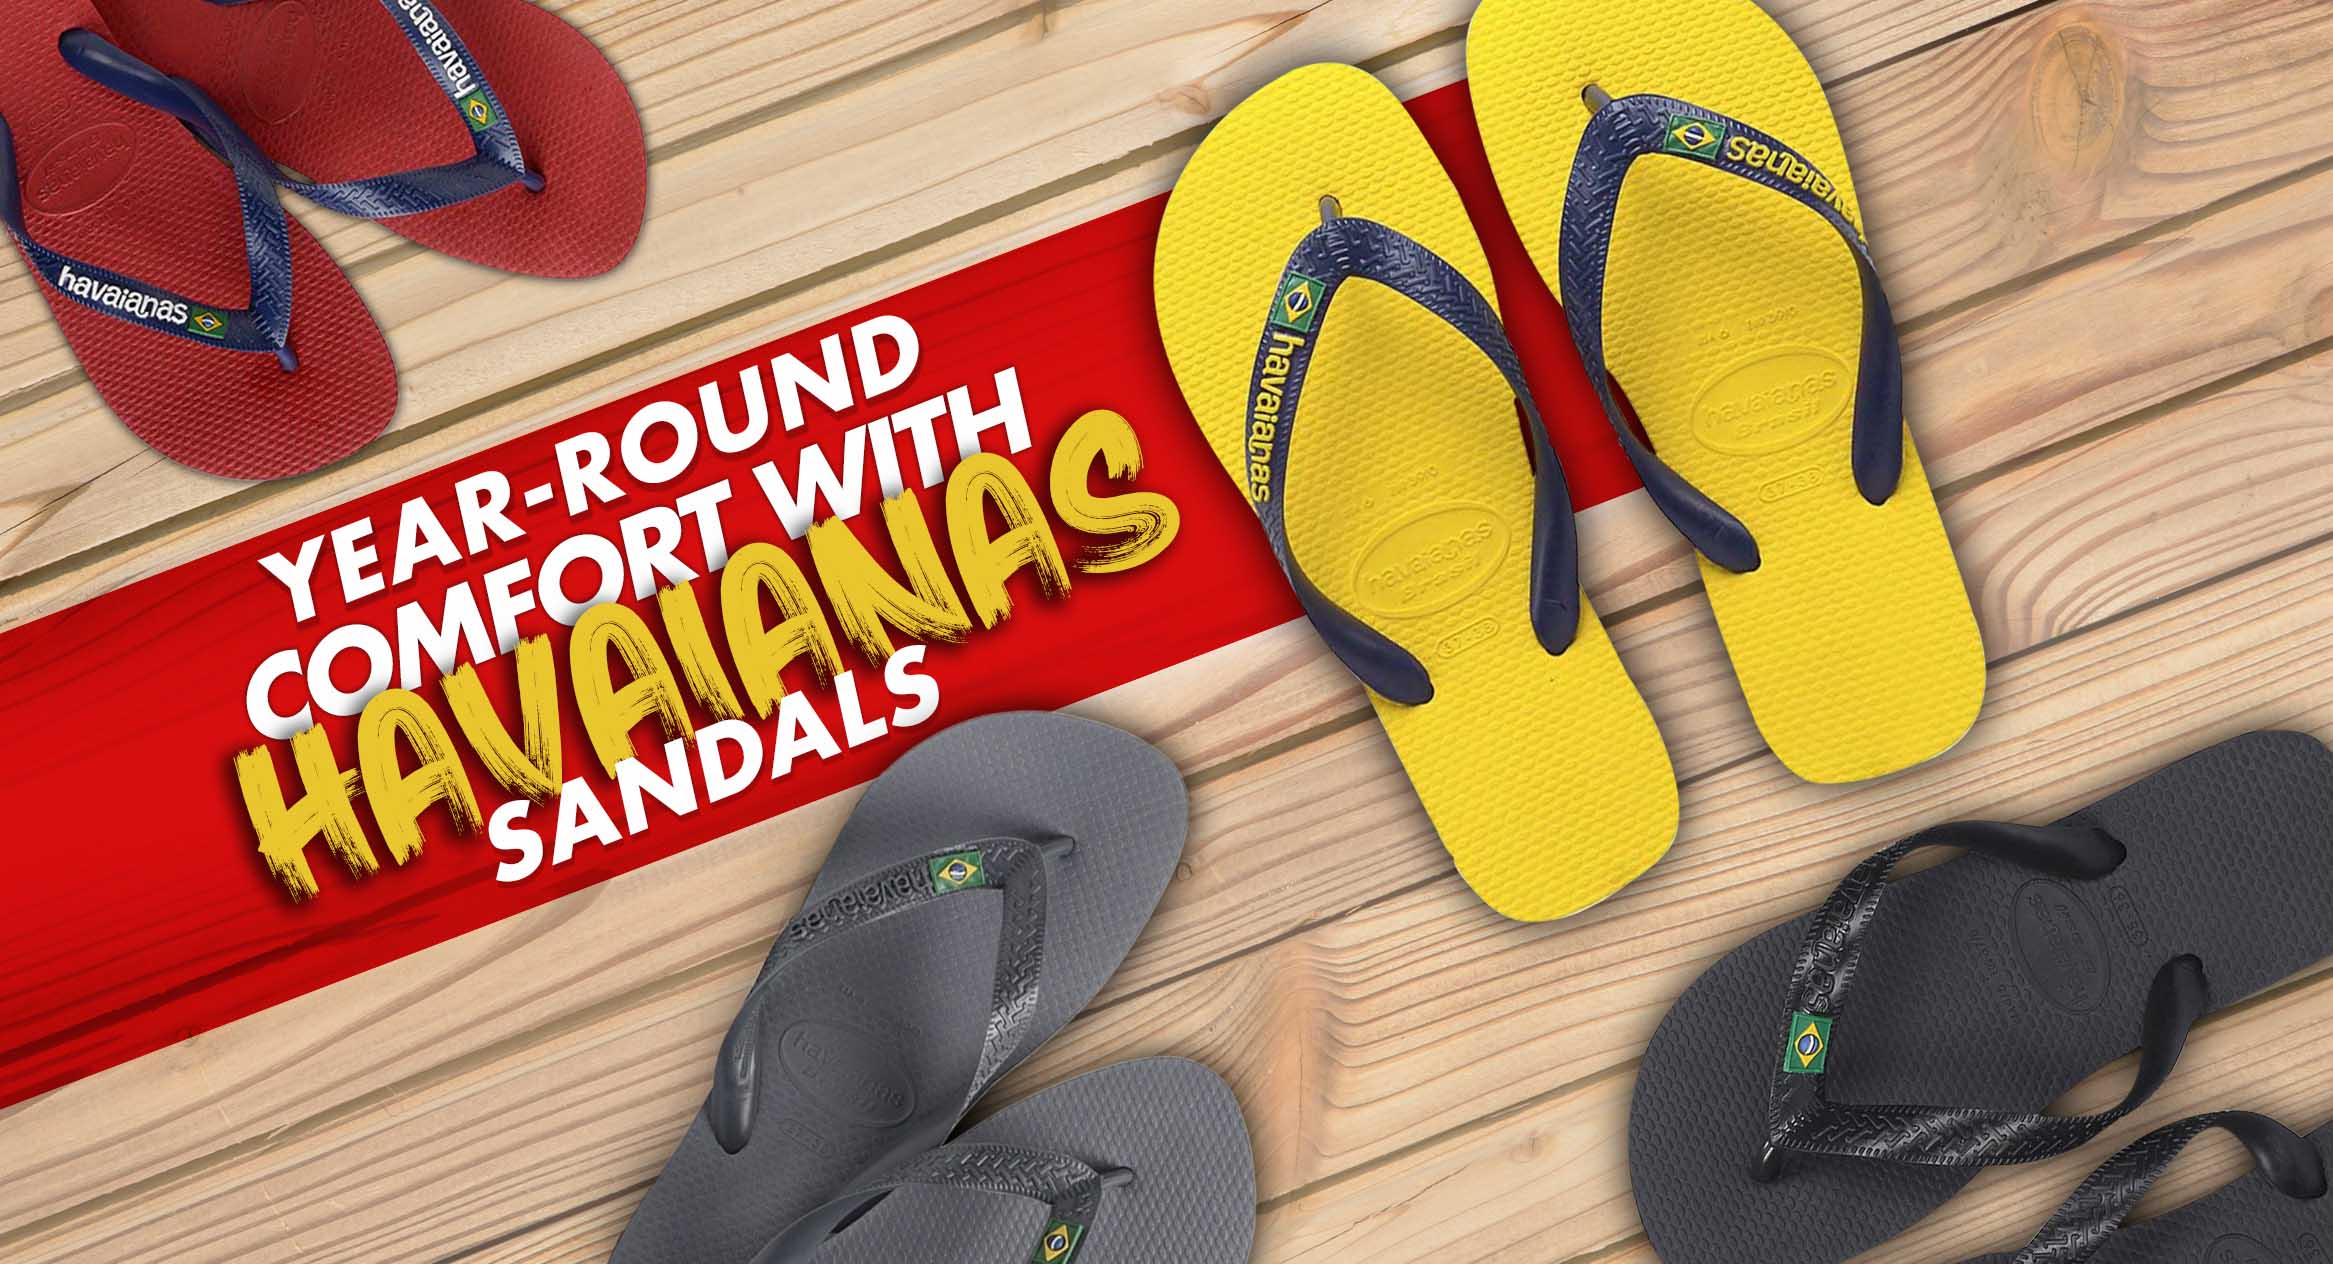 Year-Round Comfort with Havaianas Sandals - Blog posts